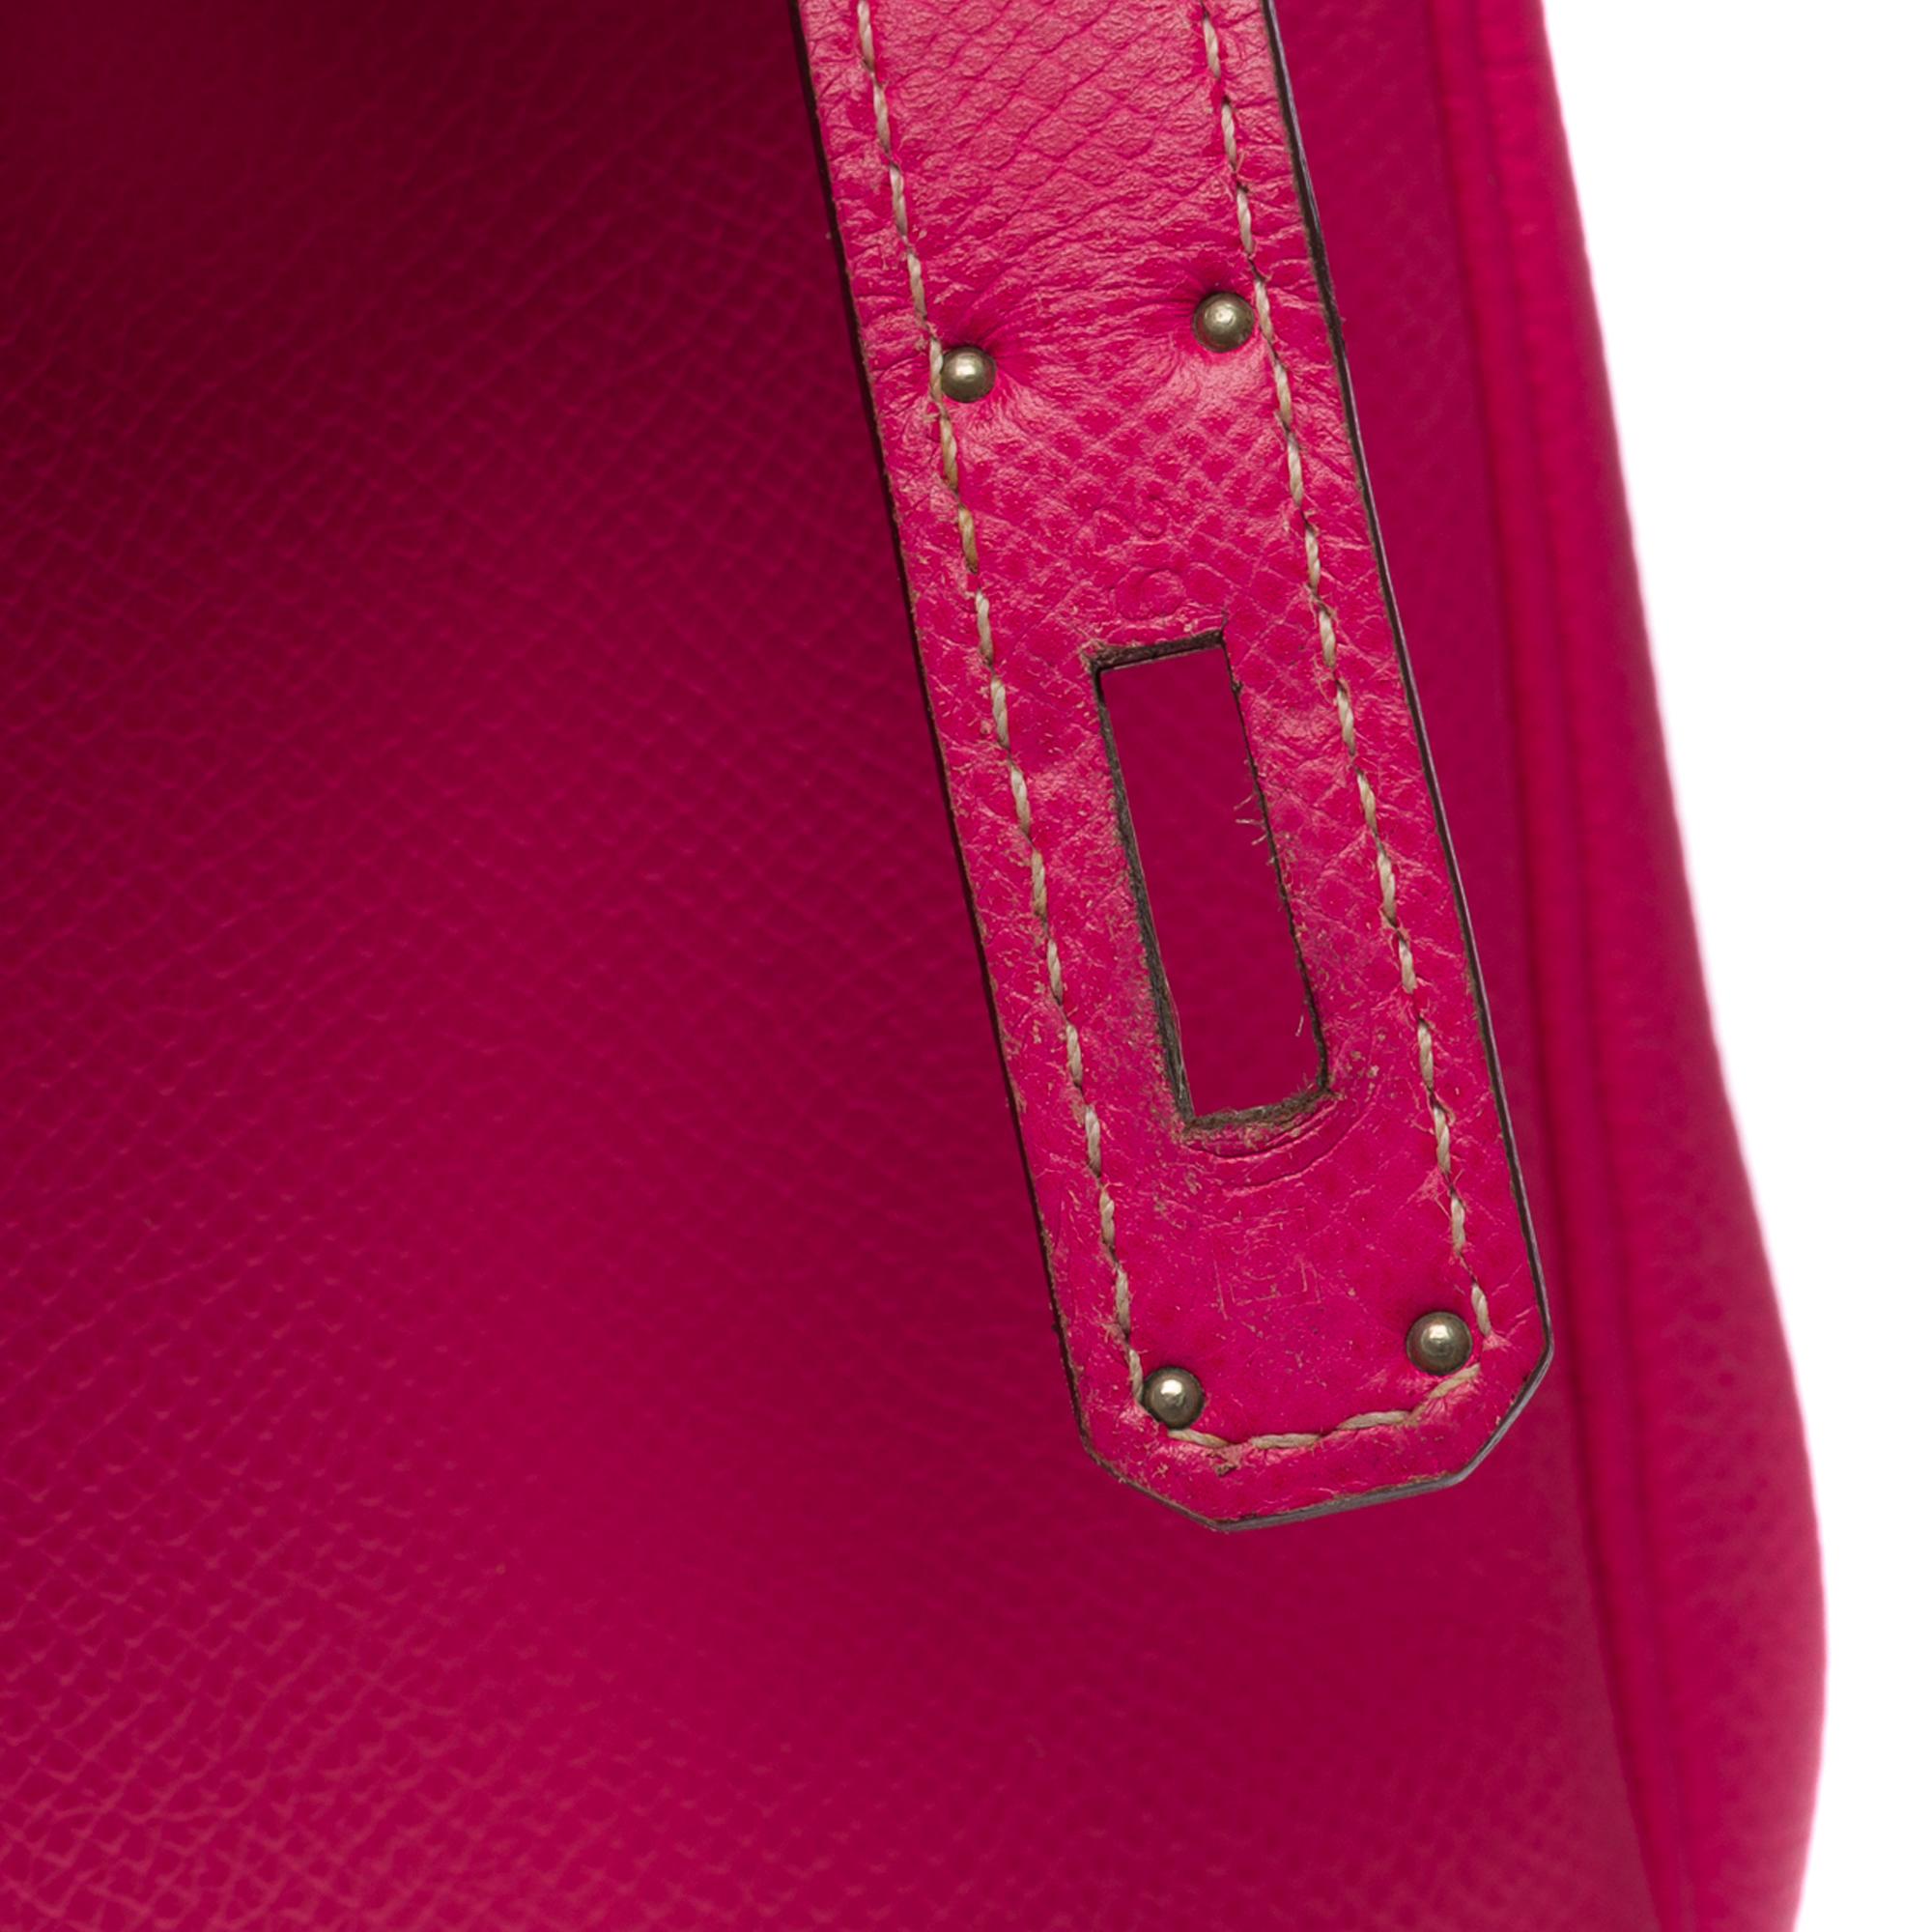 Candy Edition Hermès Kelly 35 retourne handbag strap in Pink Epsom leather, SHW 2